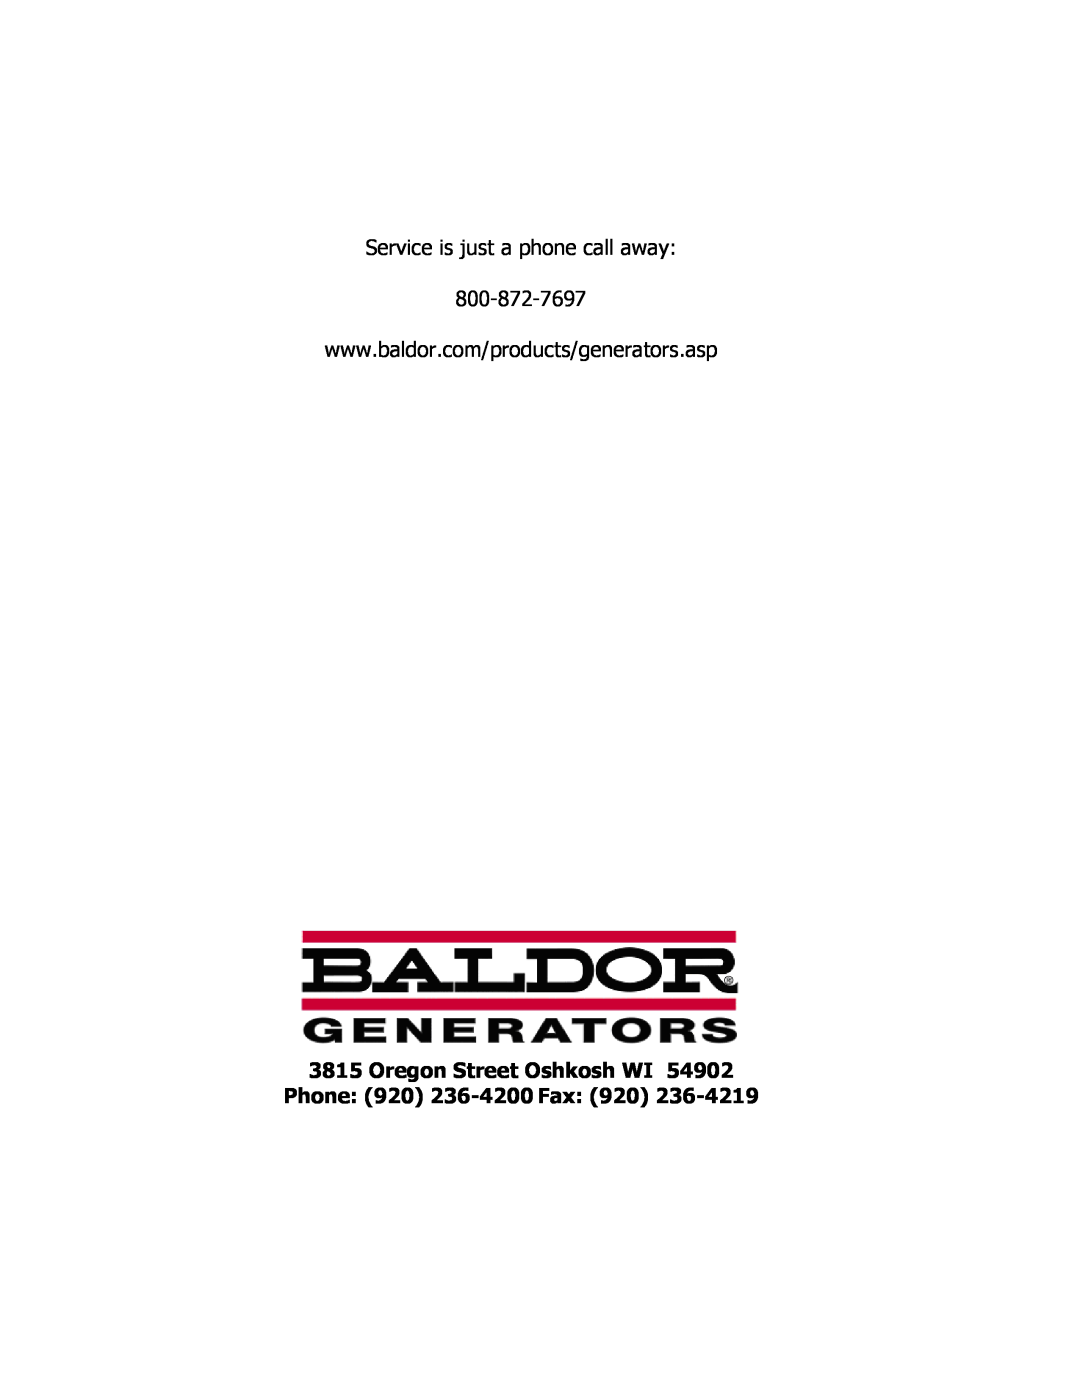 Baldor ISO9001 manual Oregon Street Oshkosh WI Phone 920 236-4200 Fax 920, Service is just a phone call away 